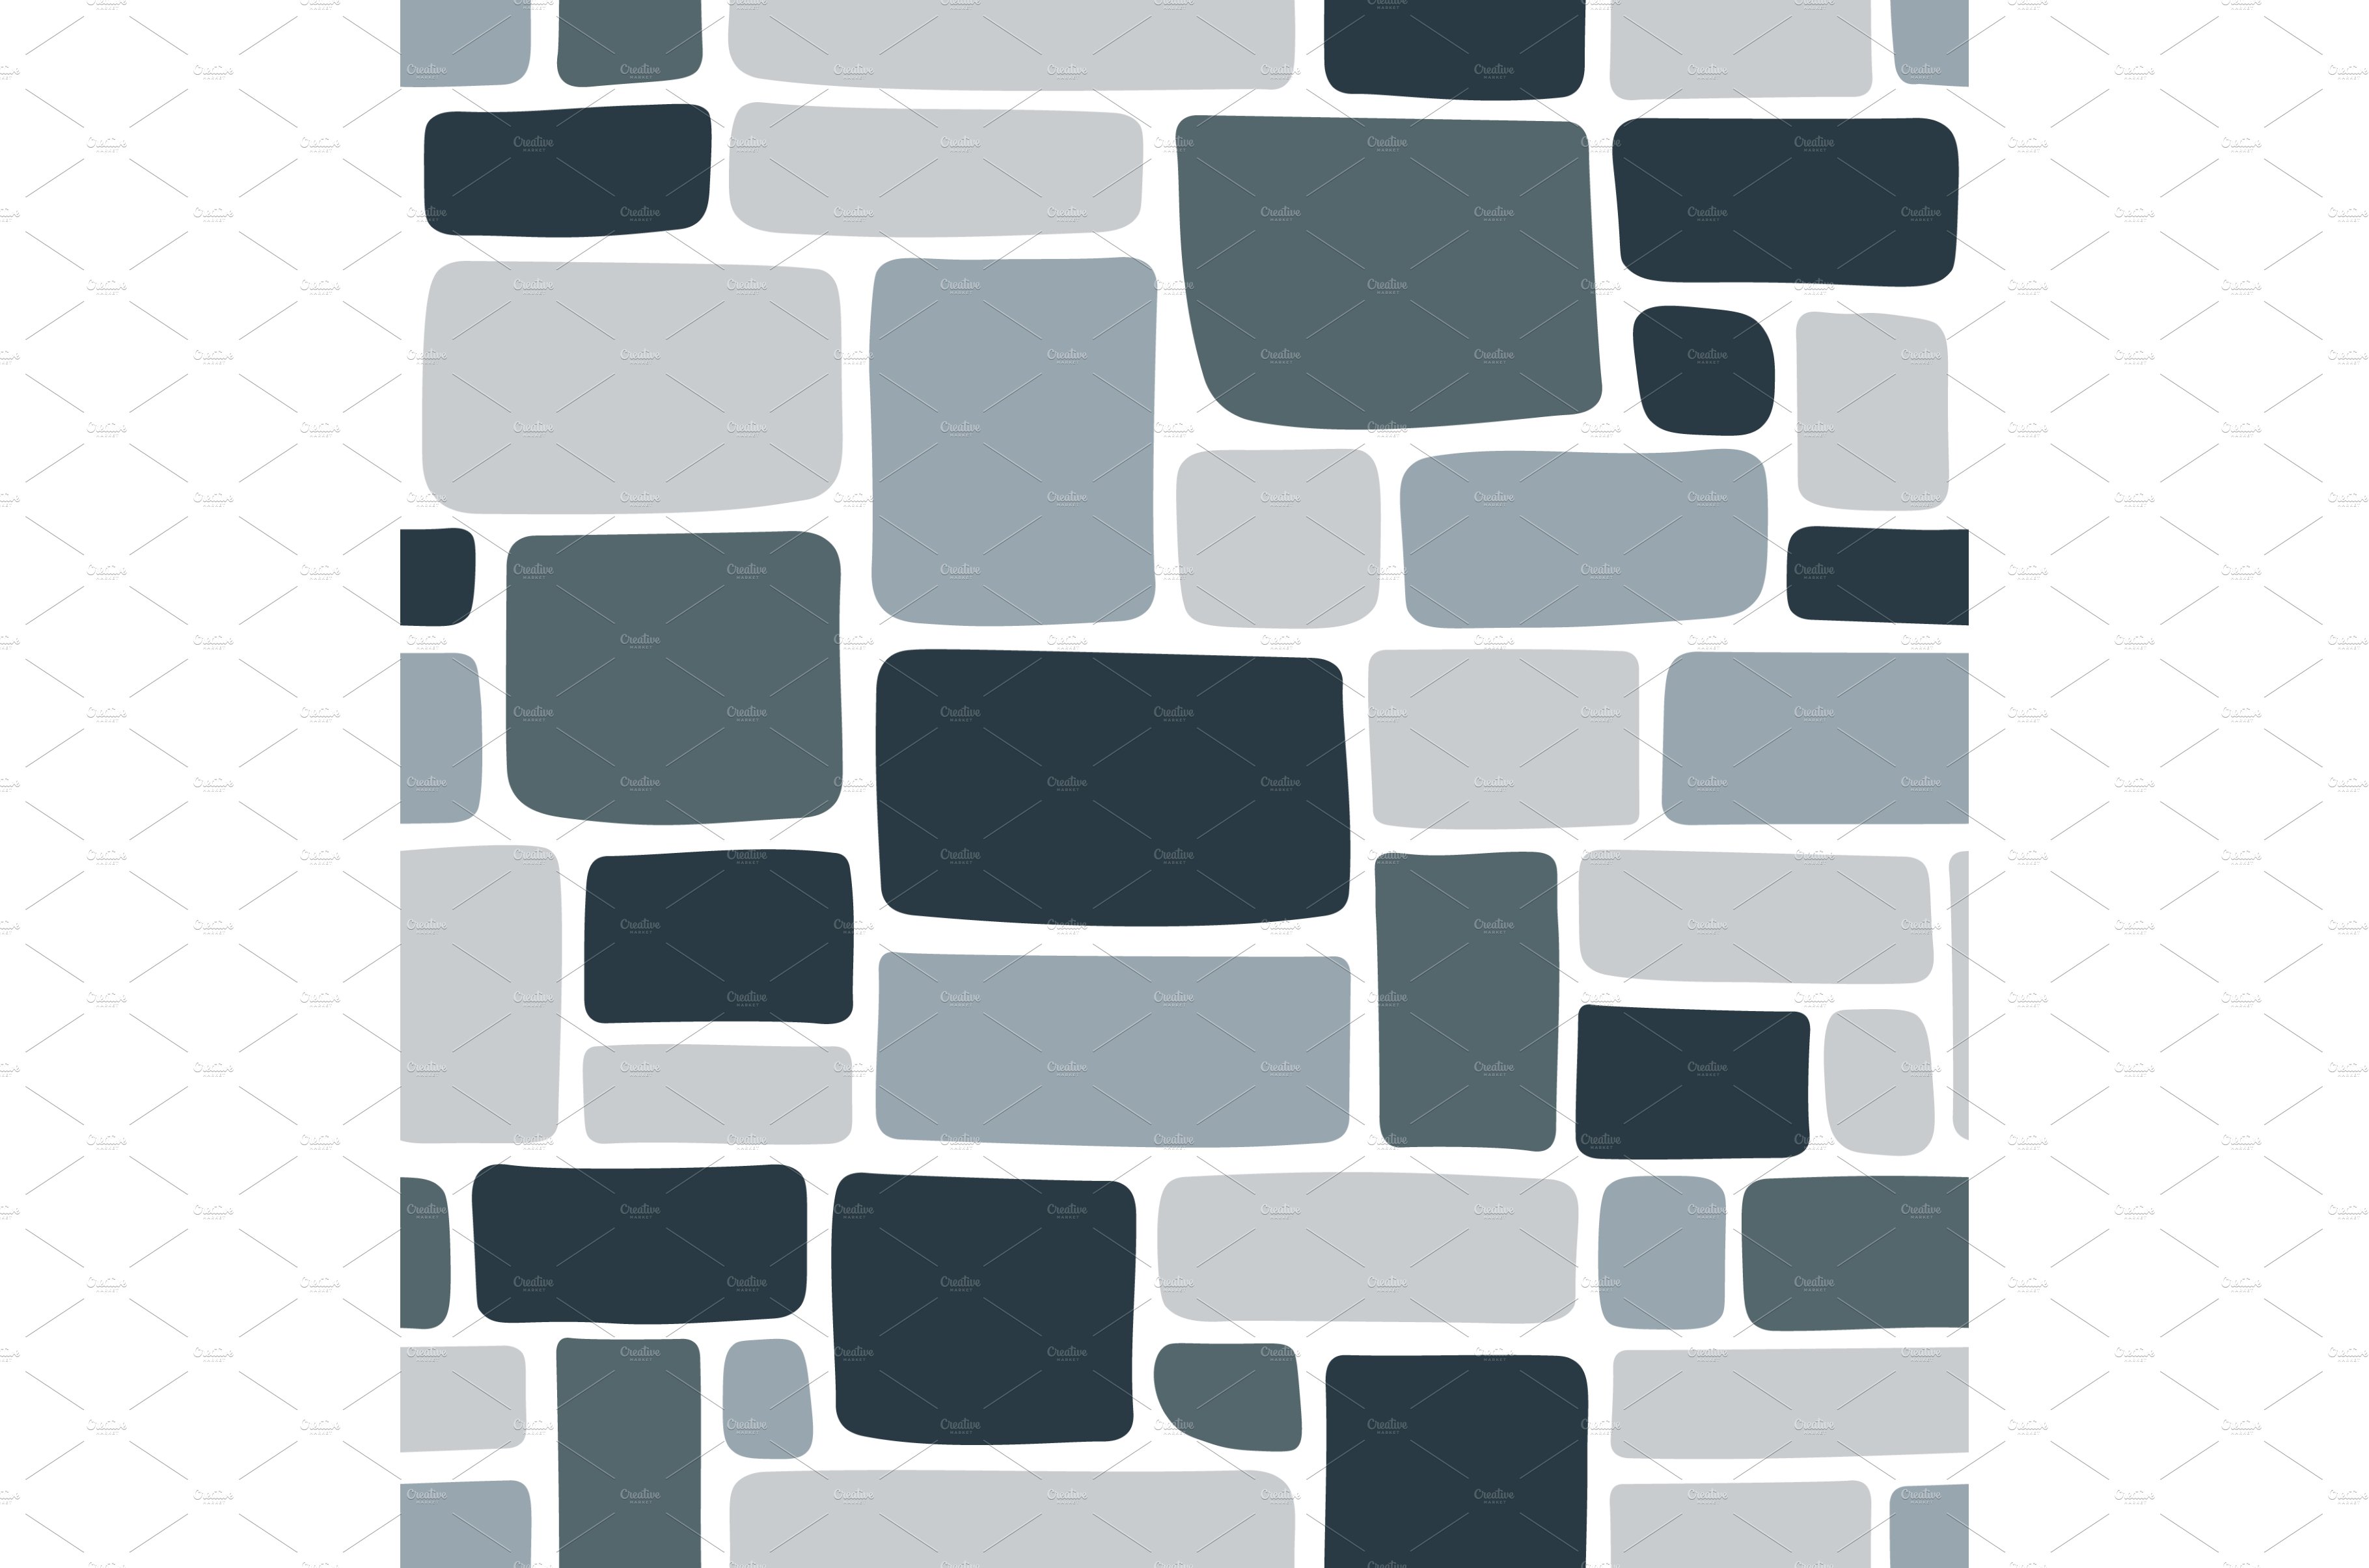 Mosaic stone ground seamless pattern cover image.